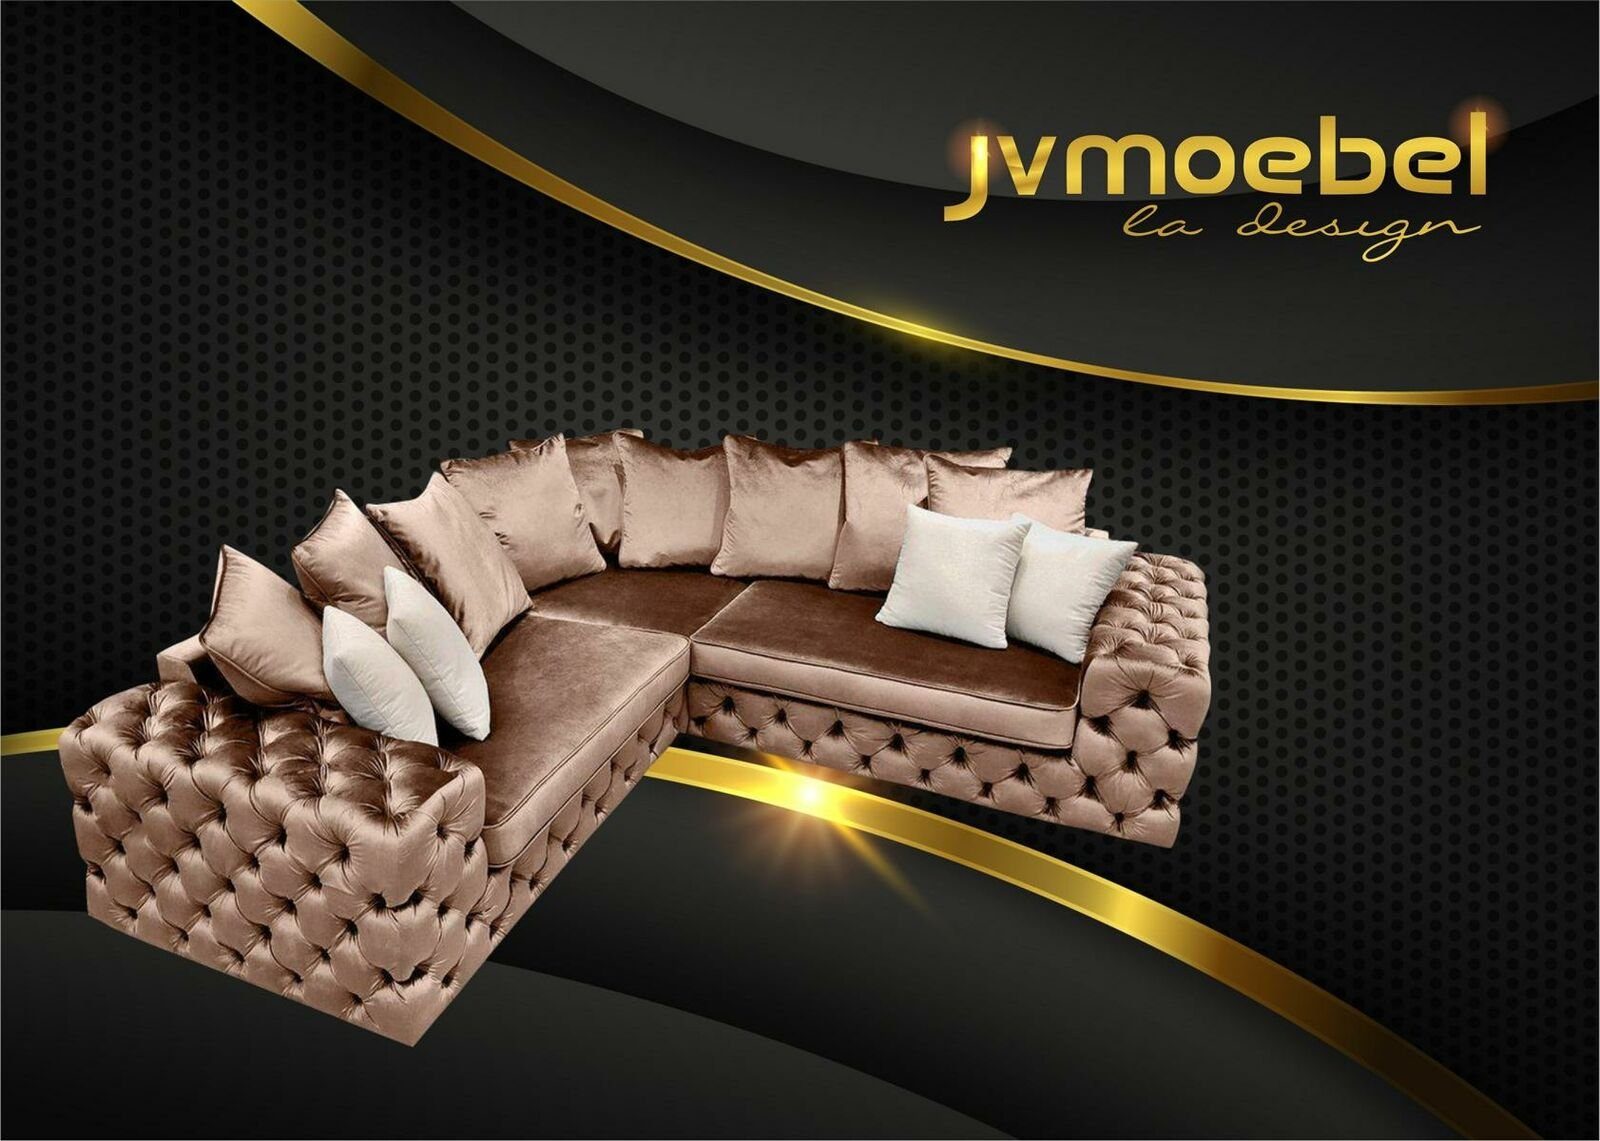 JVmoebel Ecksofa Wohnlandschaft L-Form Ecksofa Couch Design Polster Textil Beige